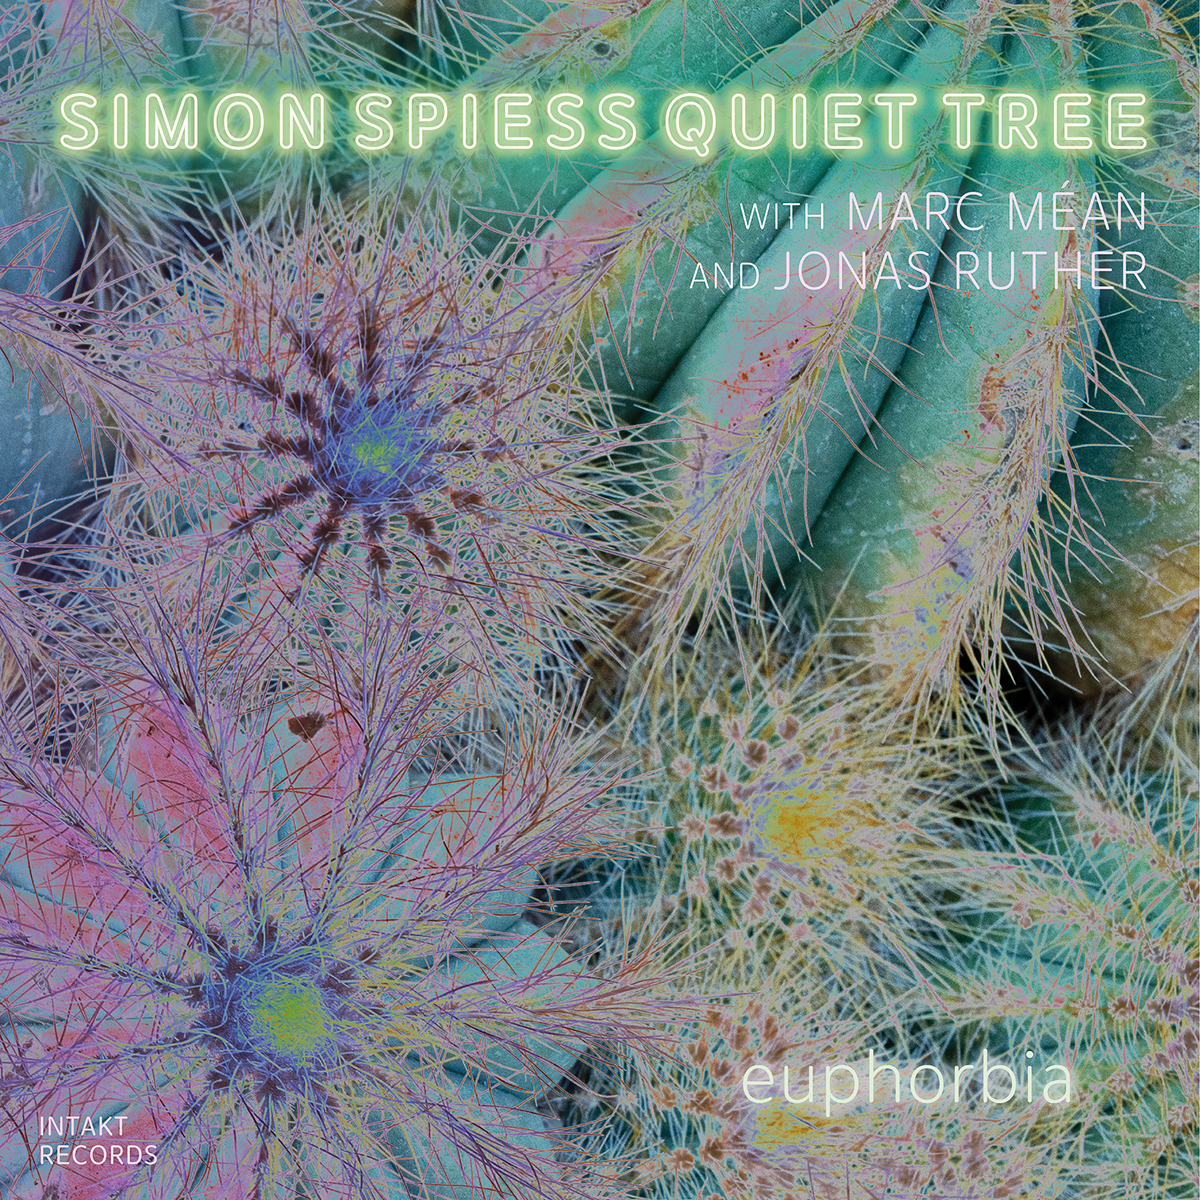 SIMON SPIESS QUIET TREE
EUPHORBIA cover front intakt records